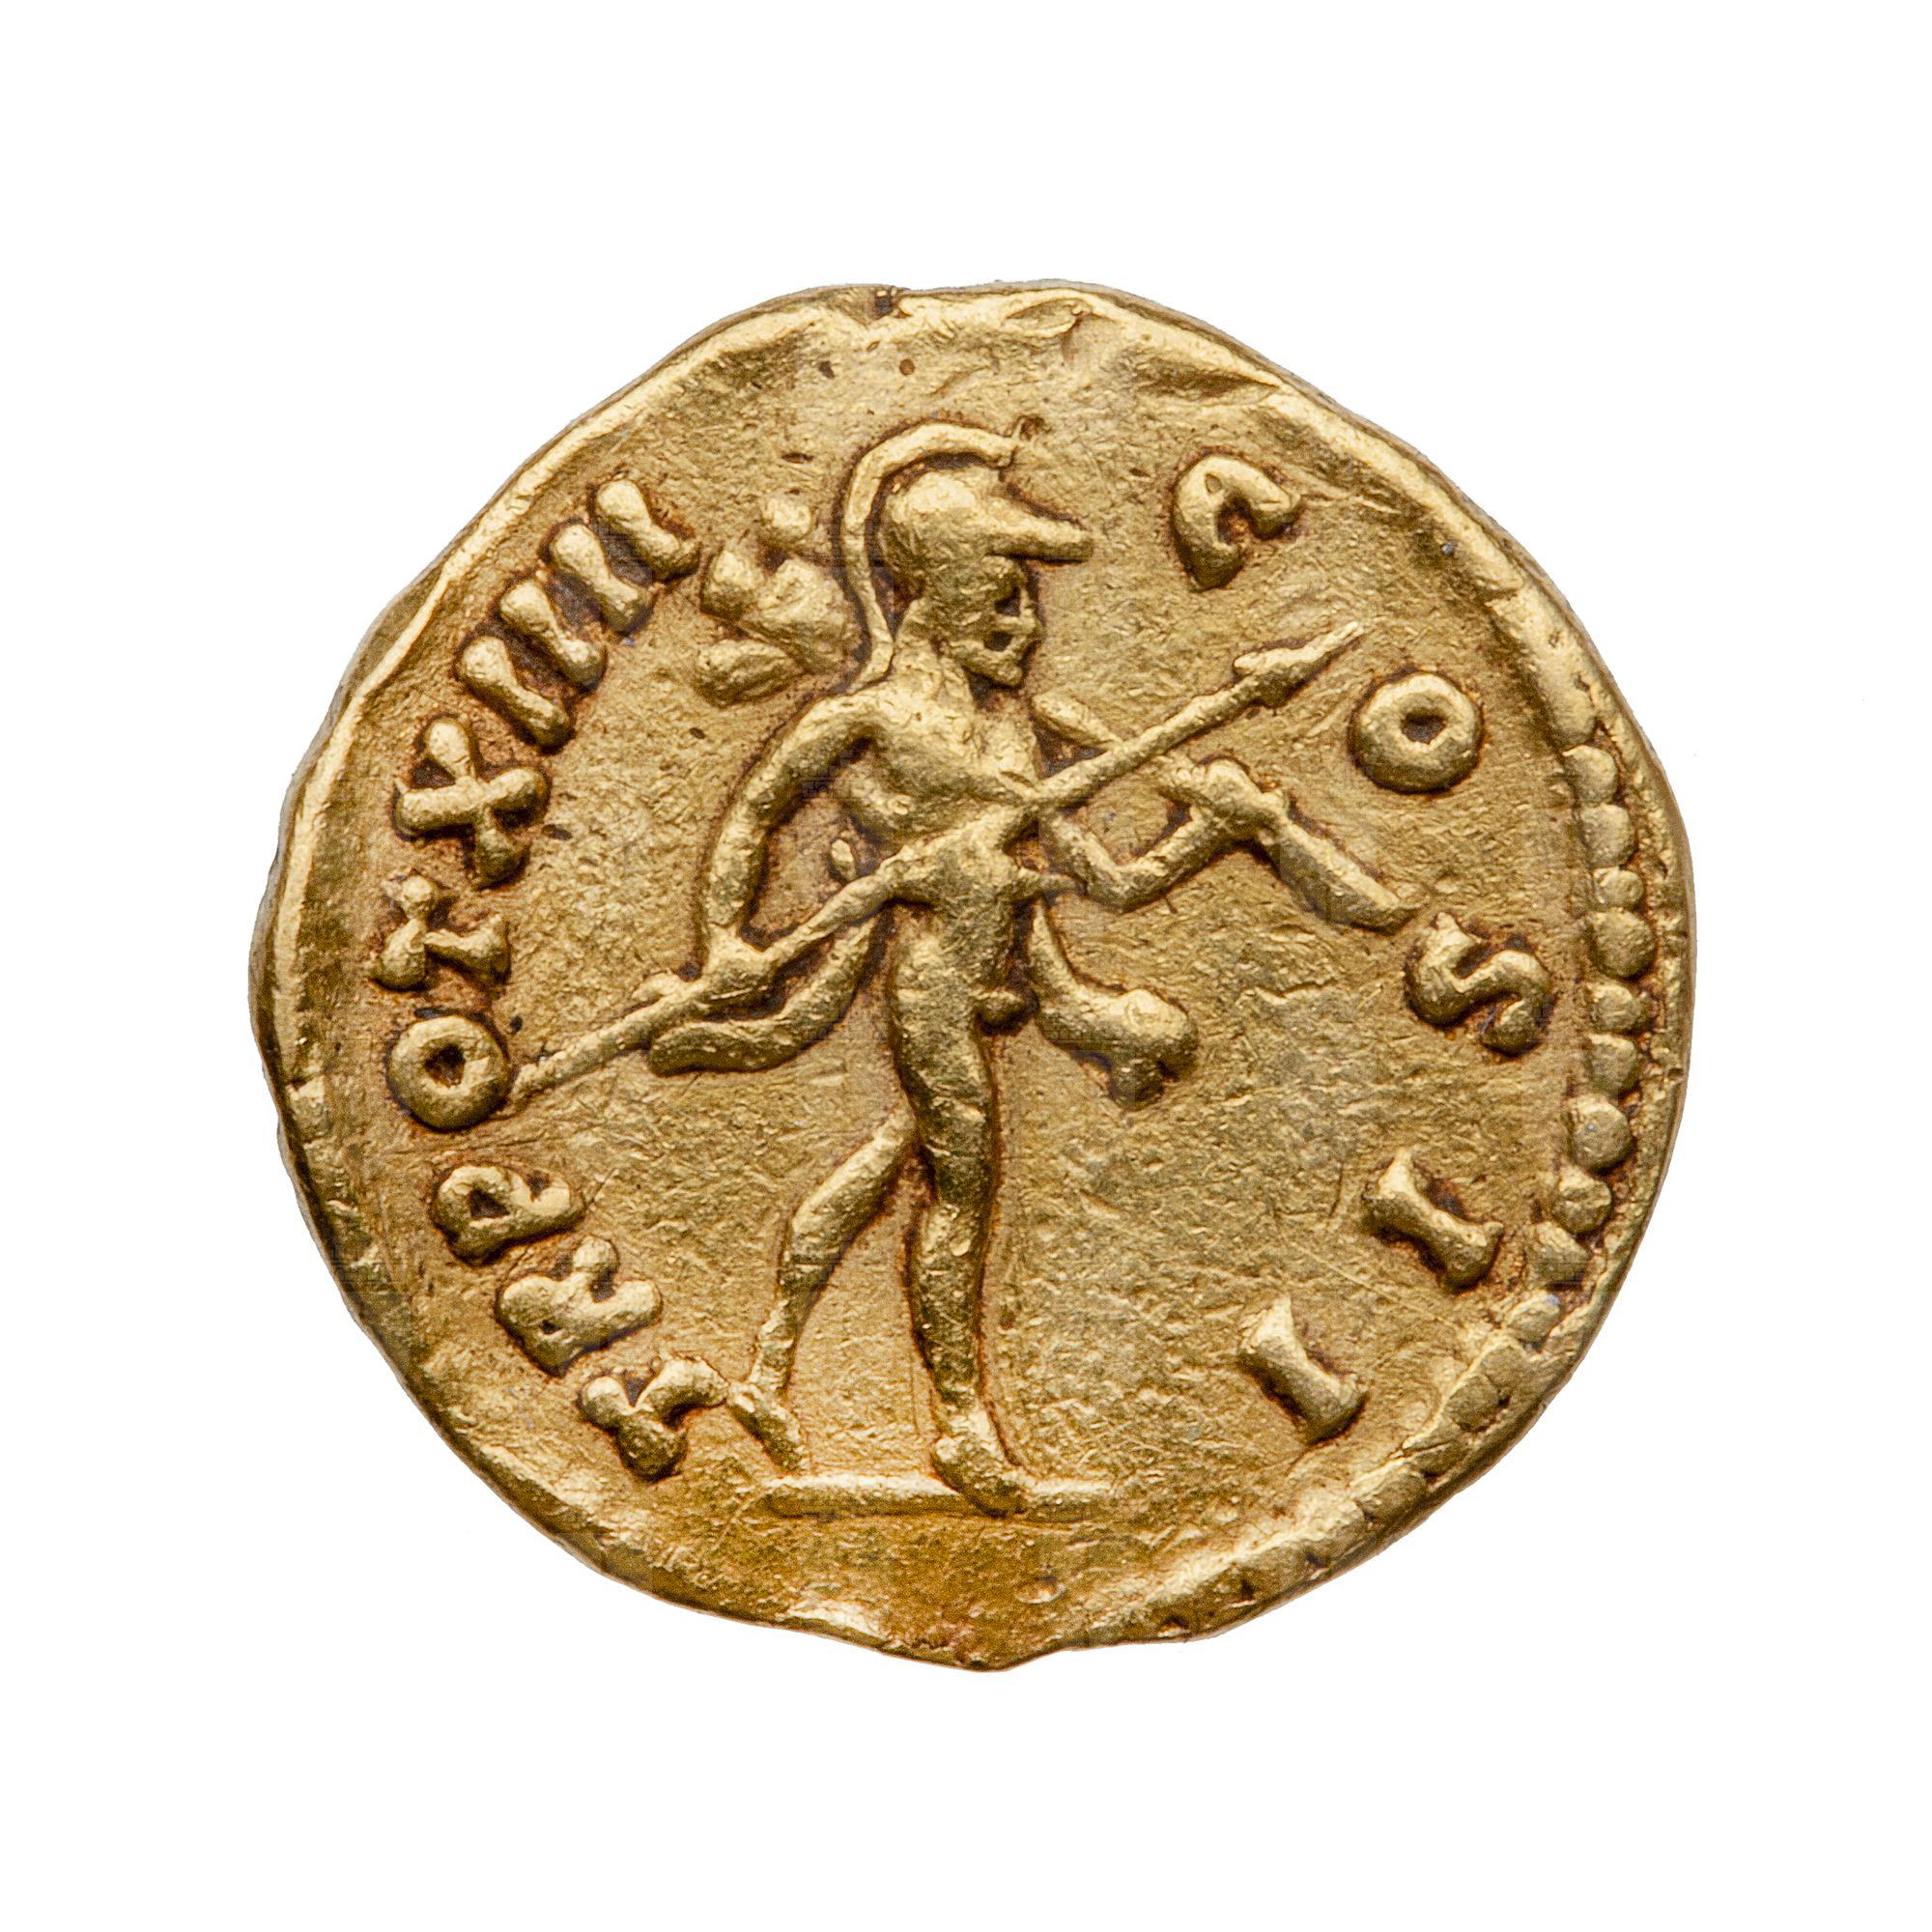 https://catalogomusei.comune.trieste.it/samira/resource/image/reperti-archeologici/Roma 927 R Marco Aurelio.jpg?token=65e6c11c35f00